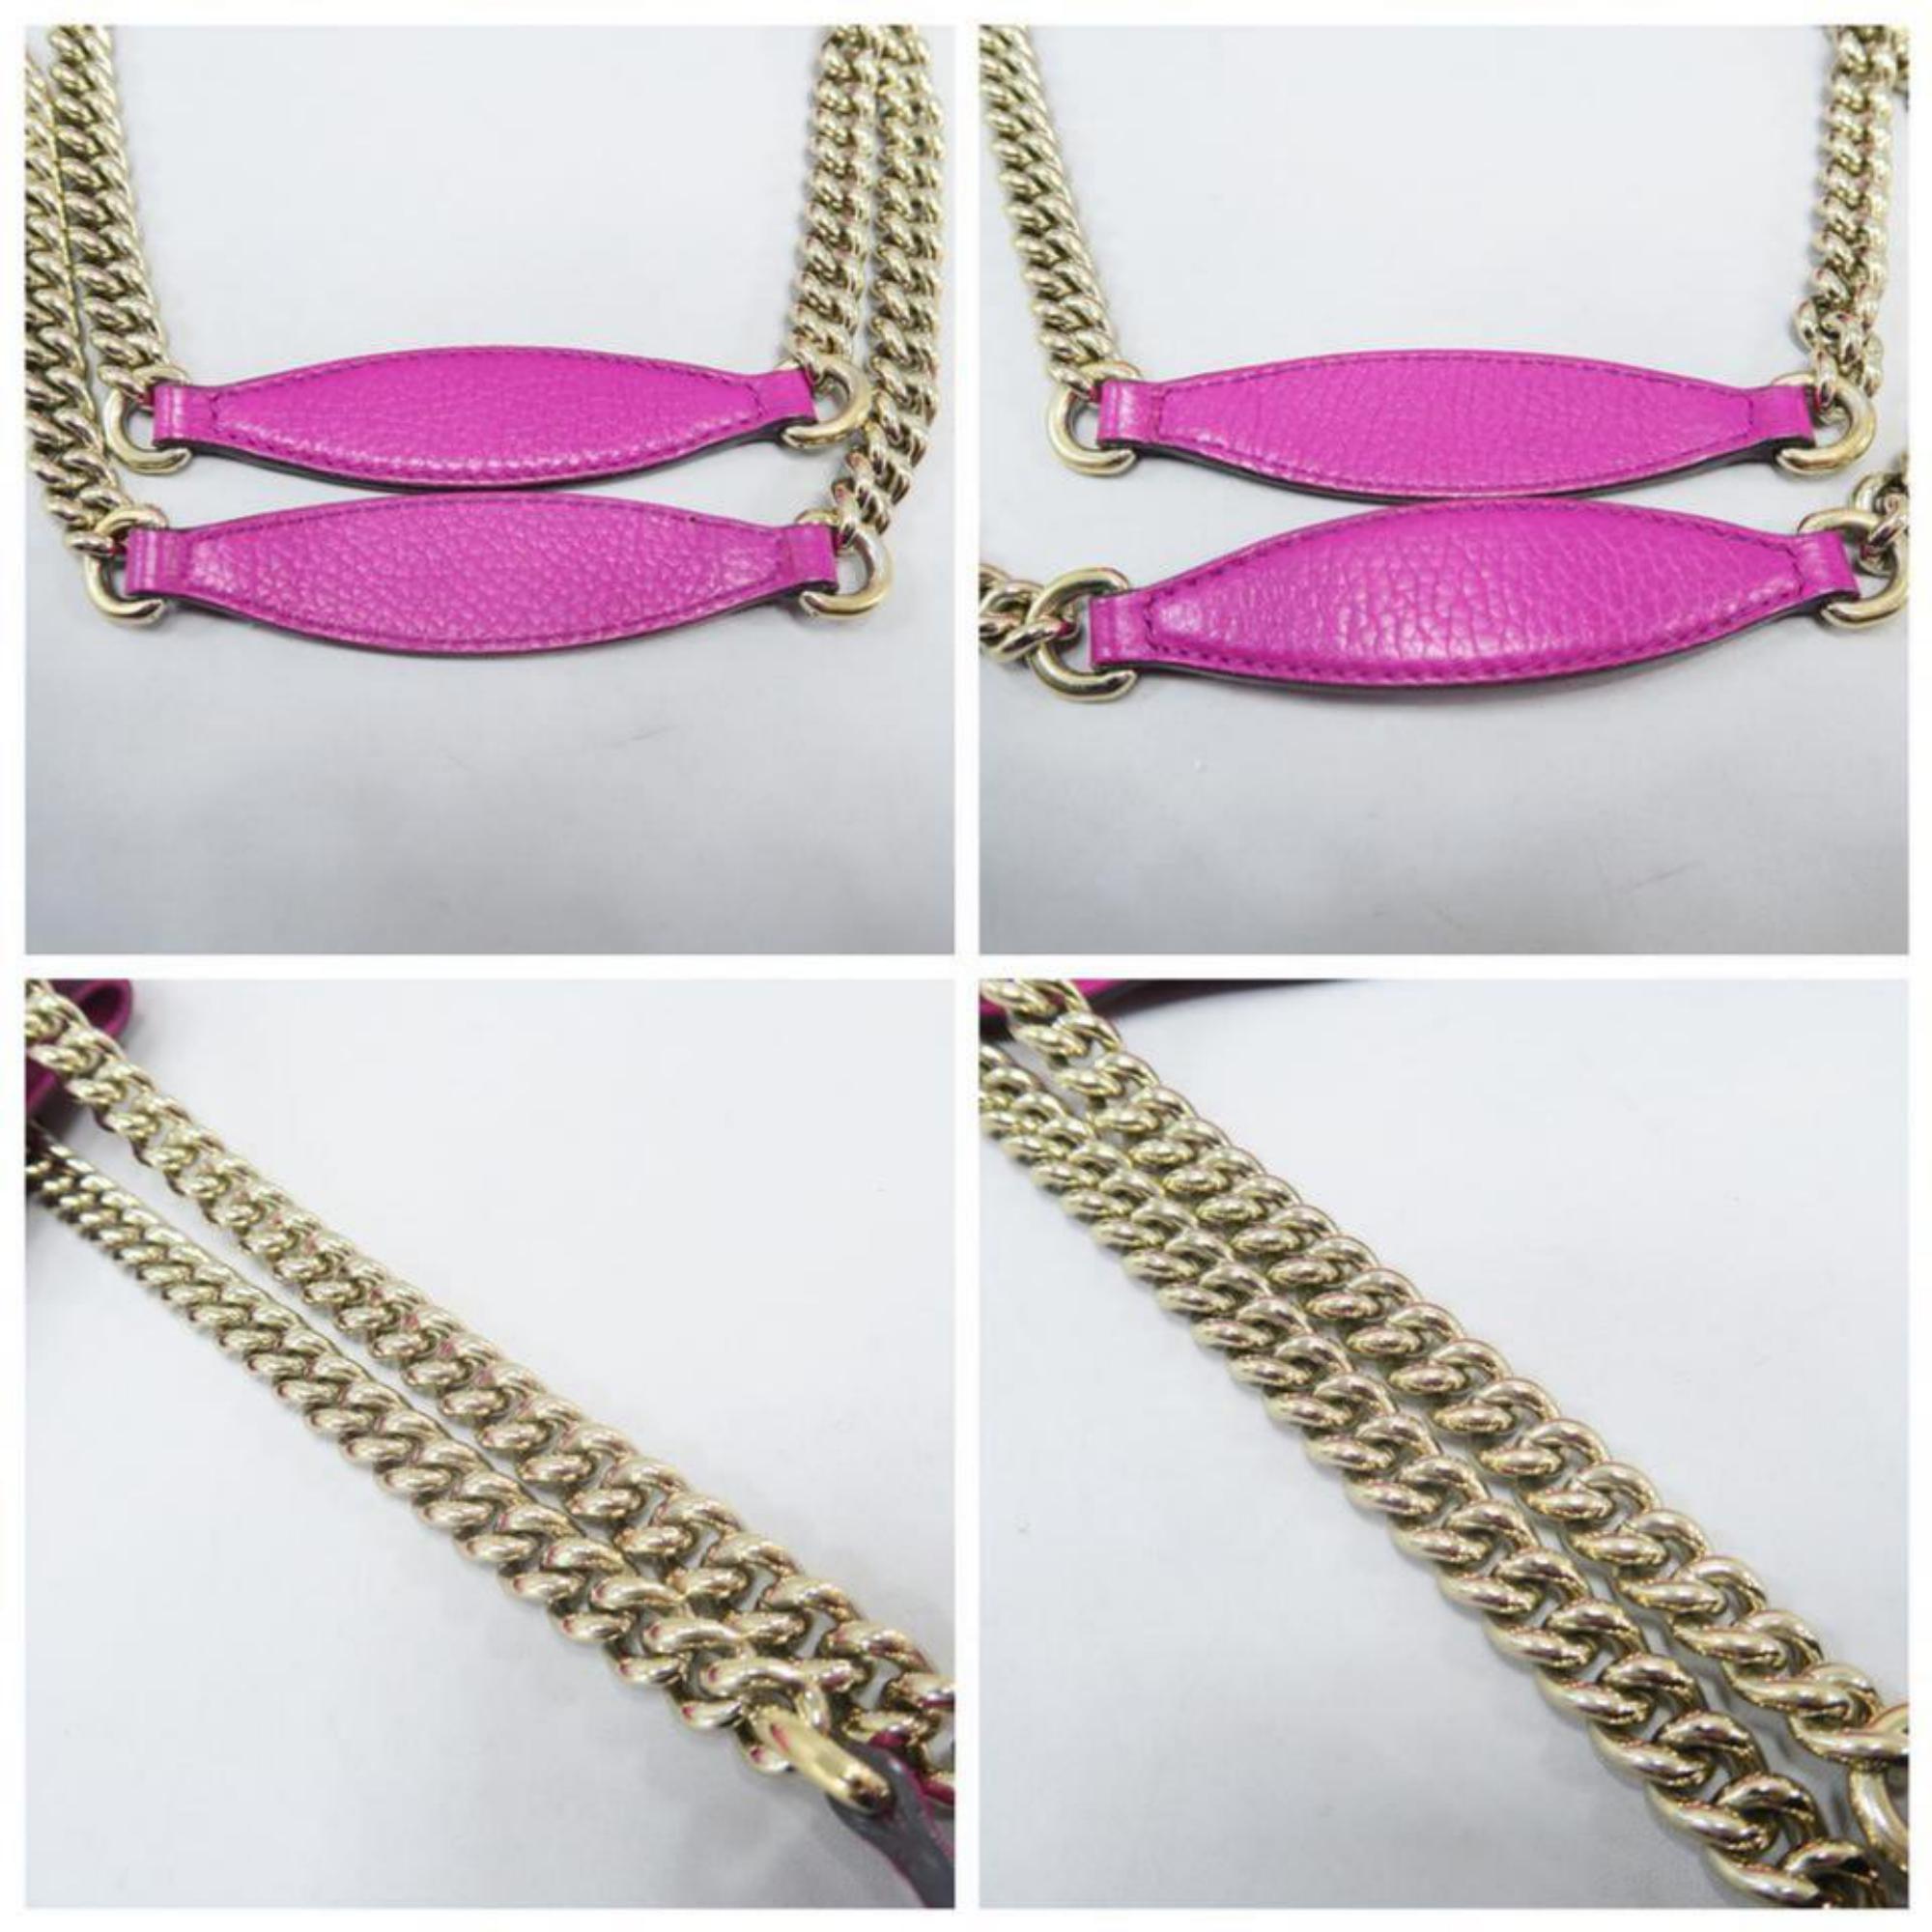 Gucci Soho Fringe Tassel Fuchsia Chain Tote 869084 Pink Leather Shoulder Bag 2